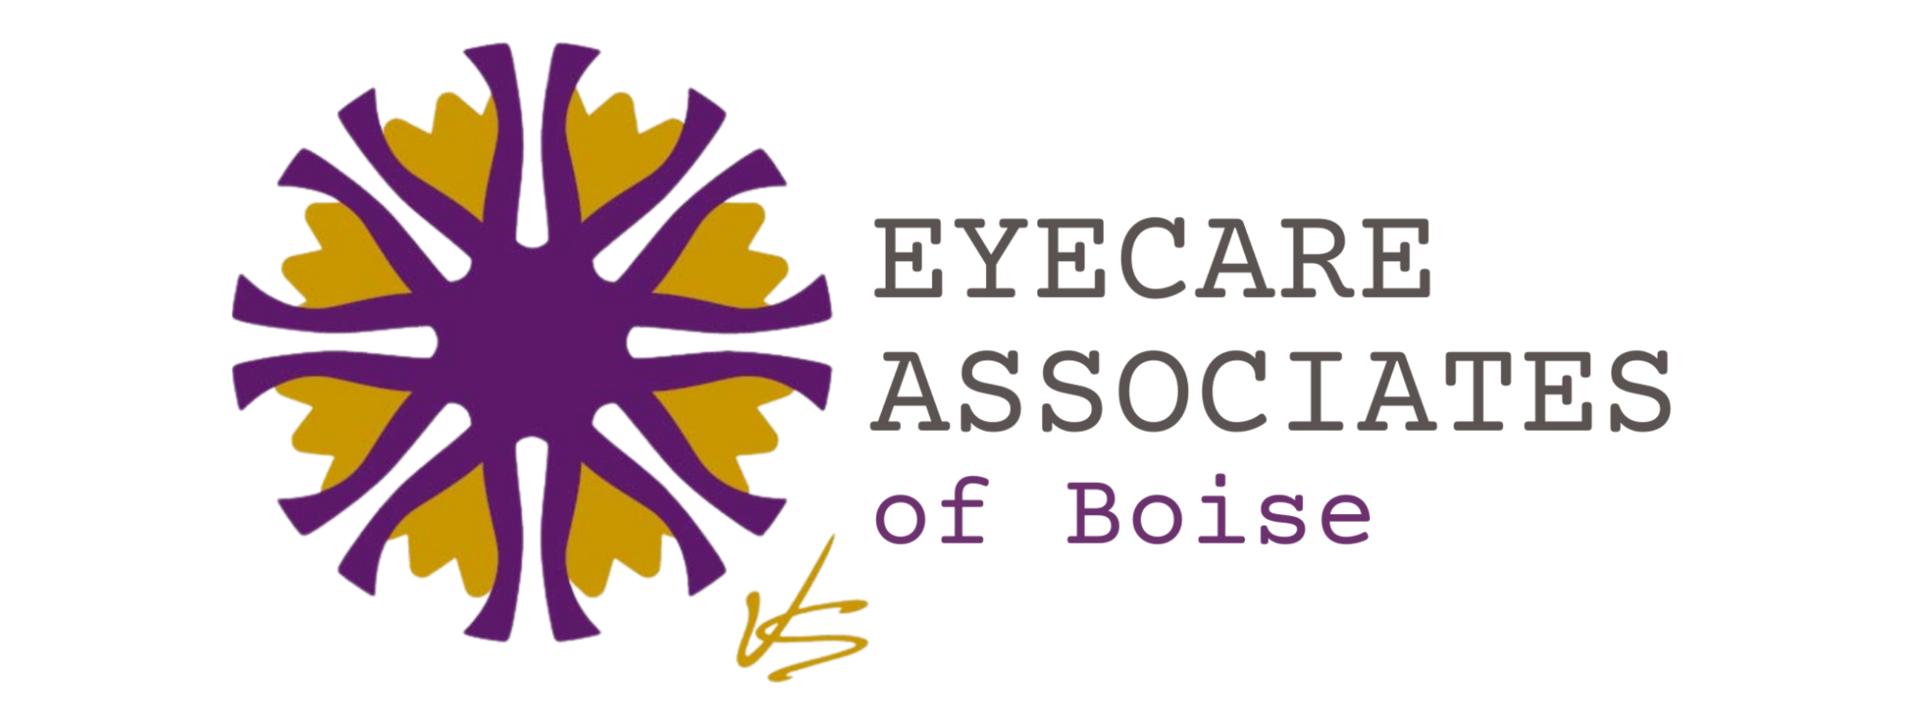 A logo for the eyecare associates of boise